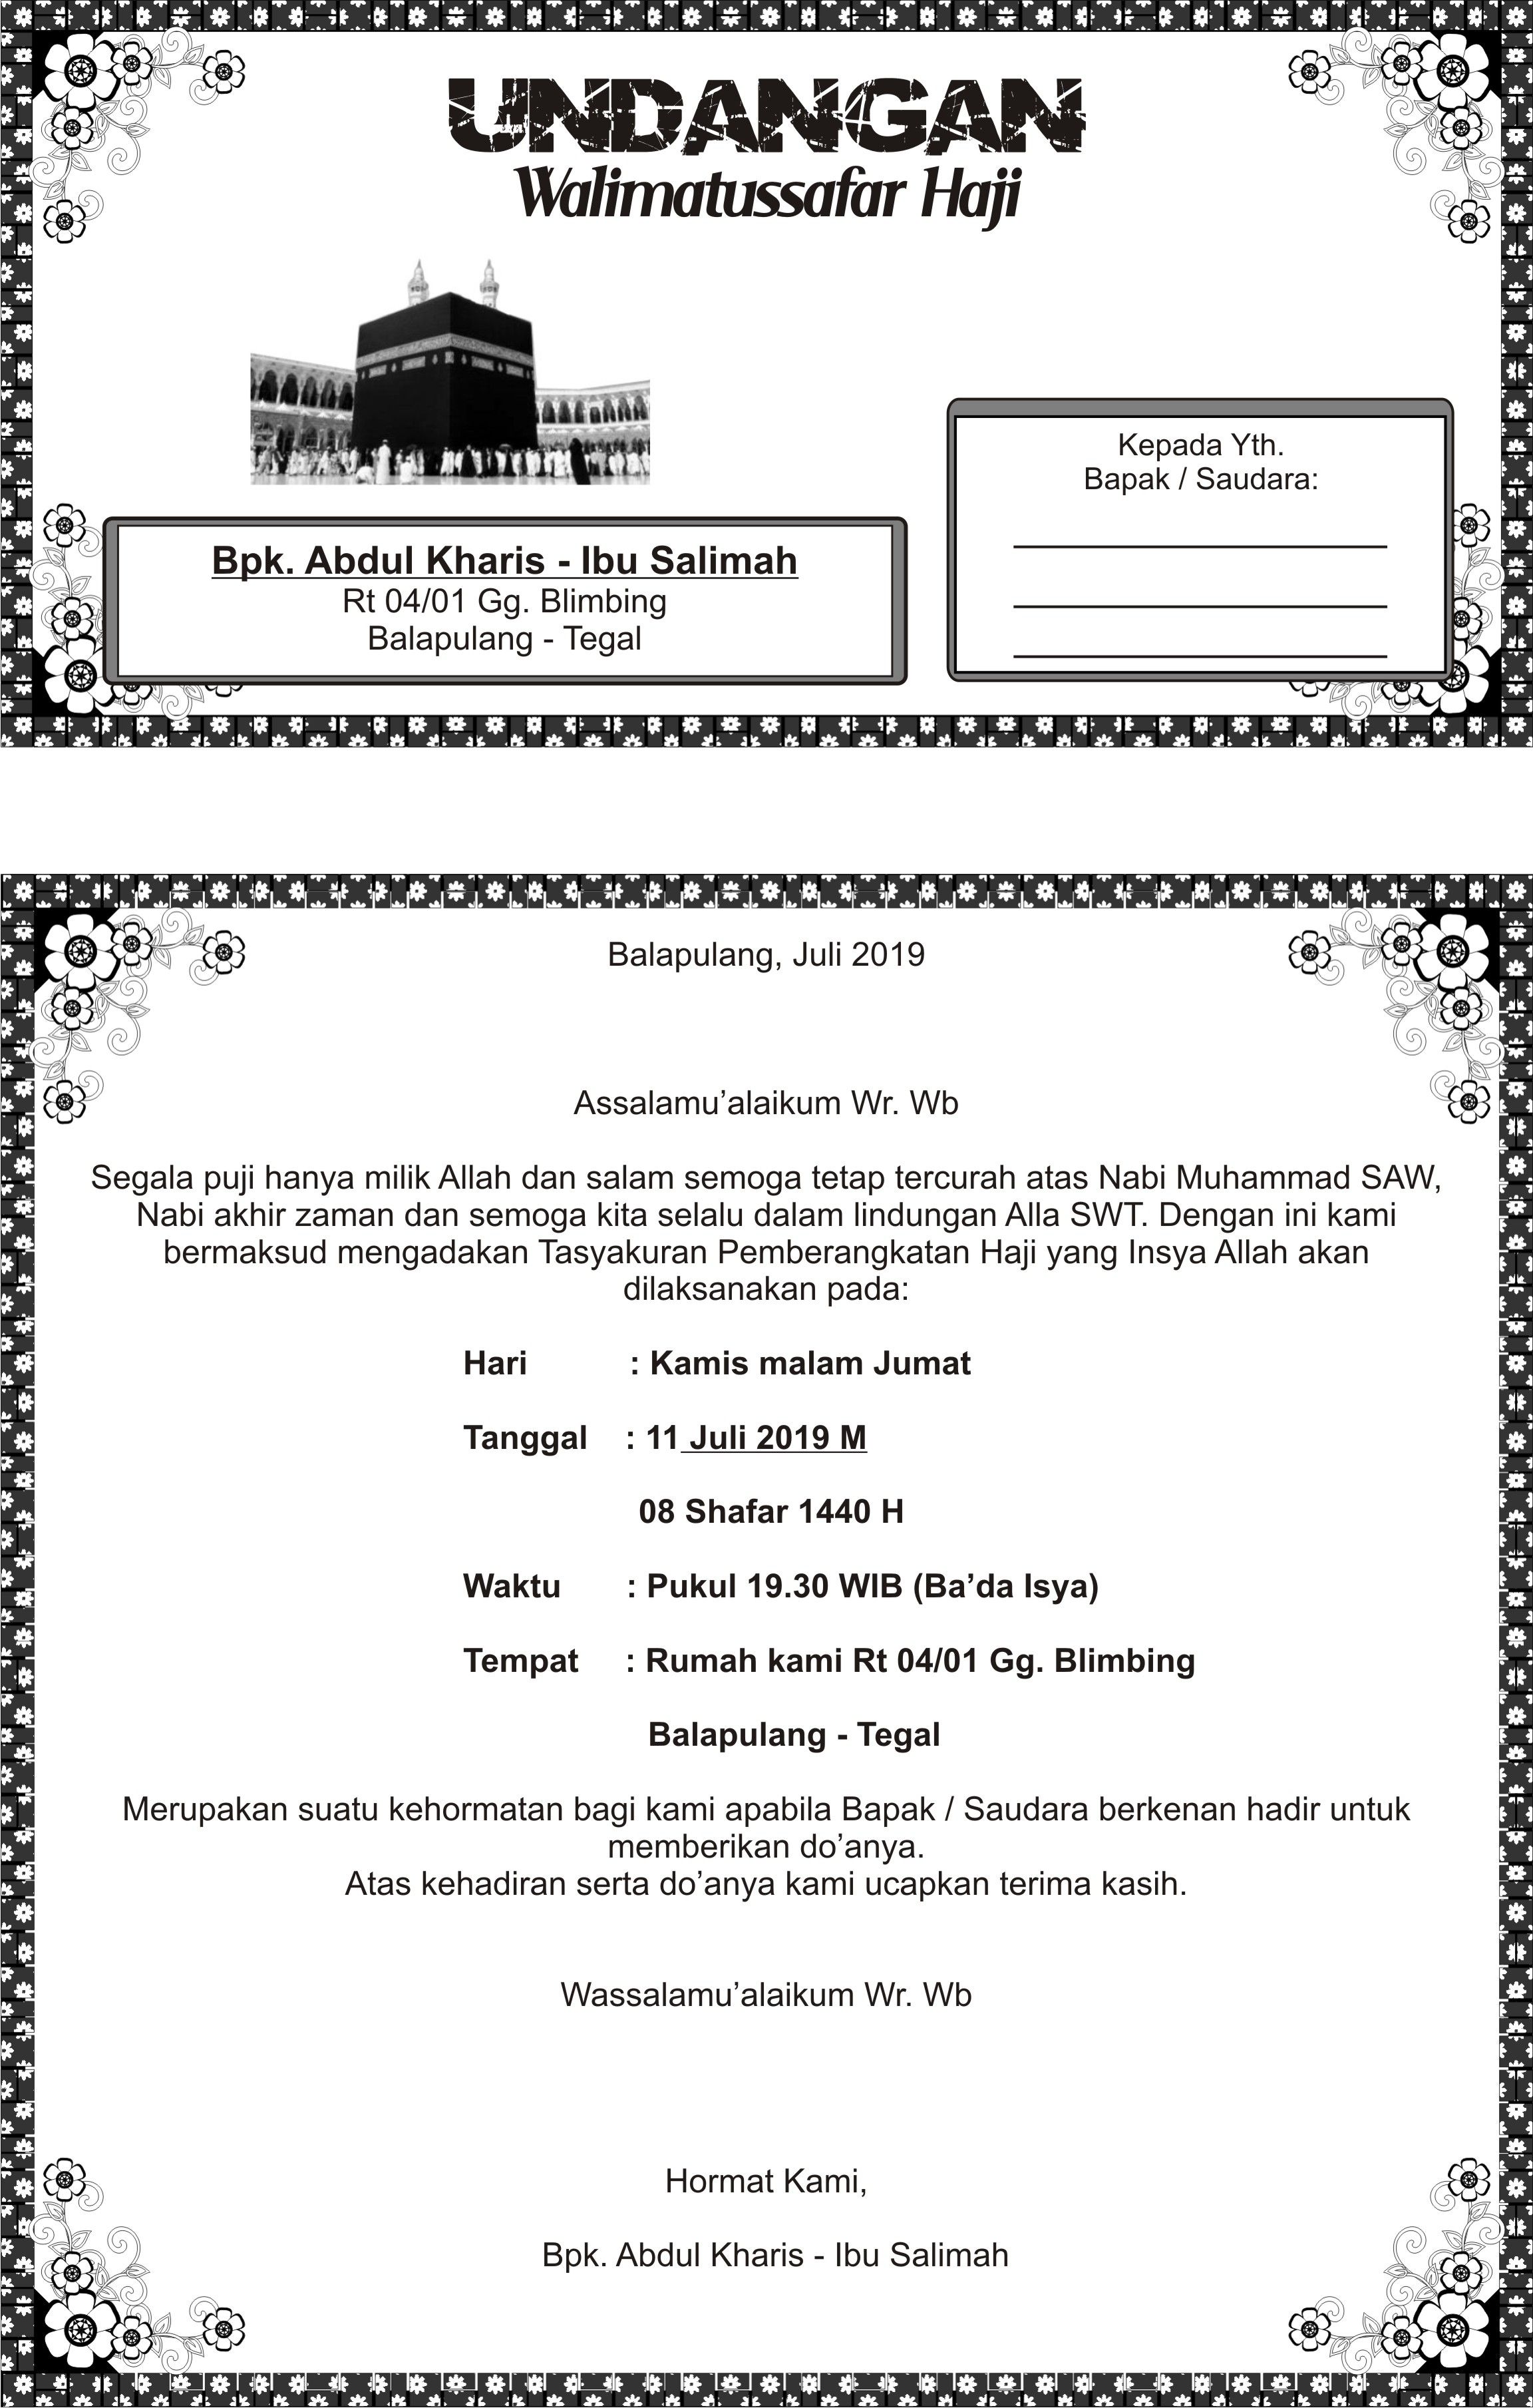 Detail Contoh Surat Undangan Walimatussafar Haji Nomer 8